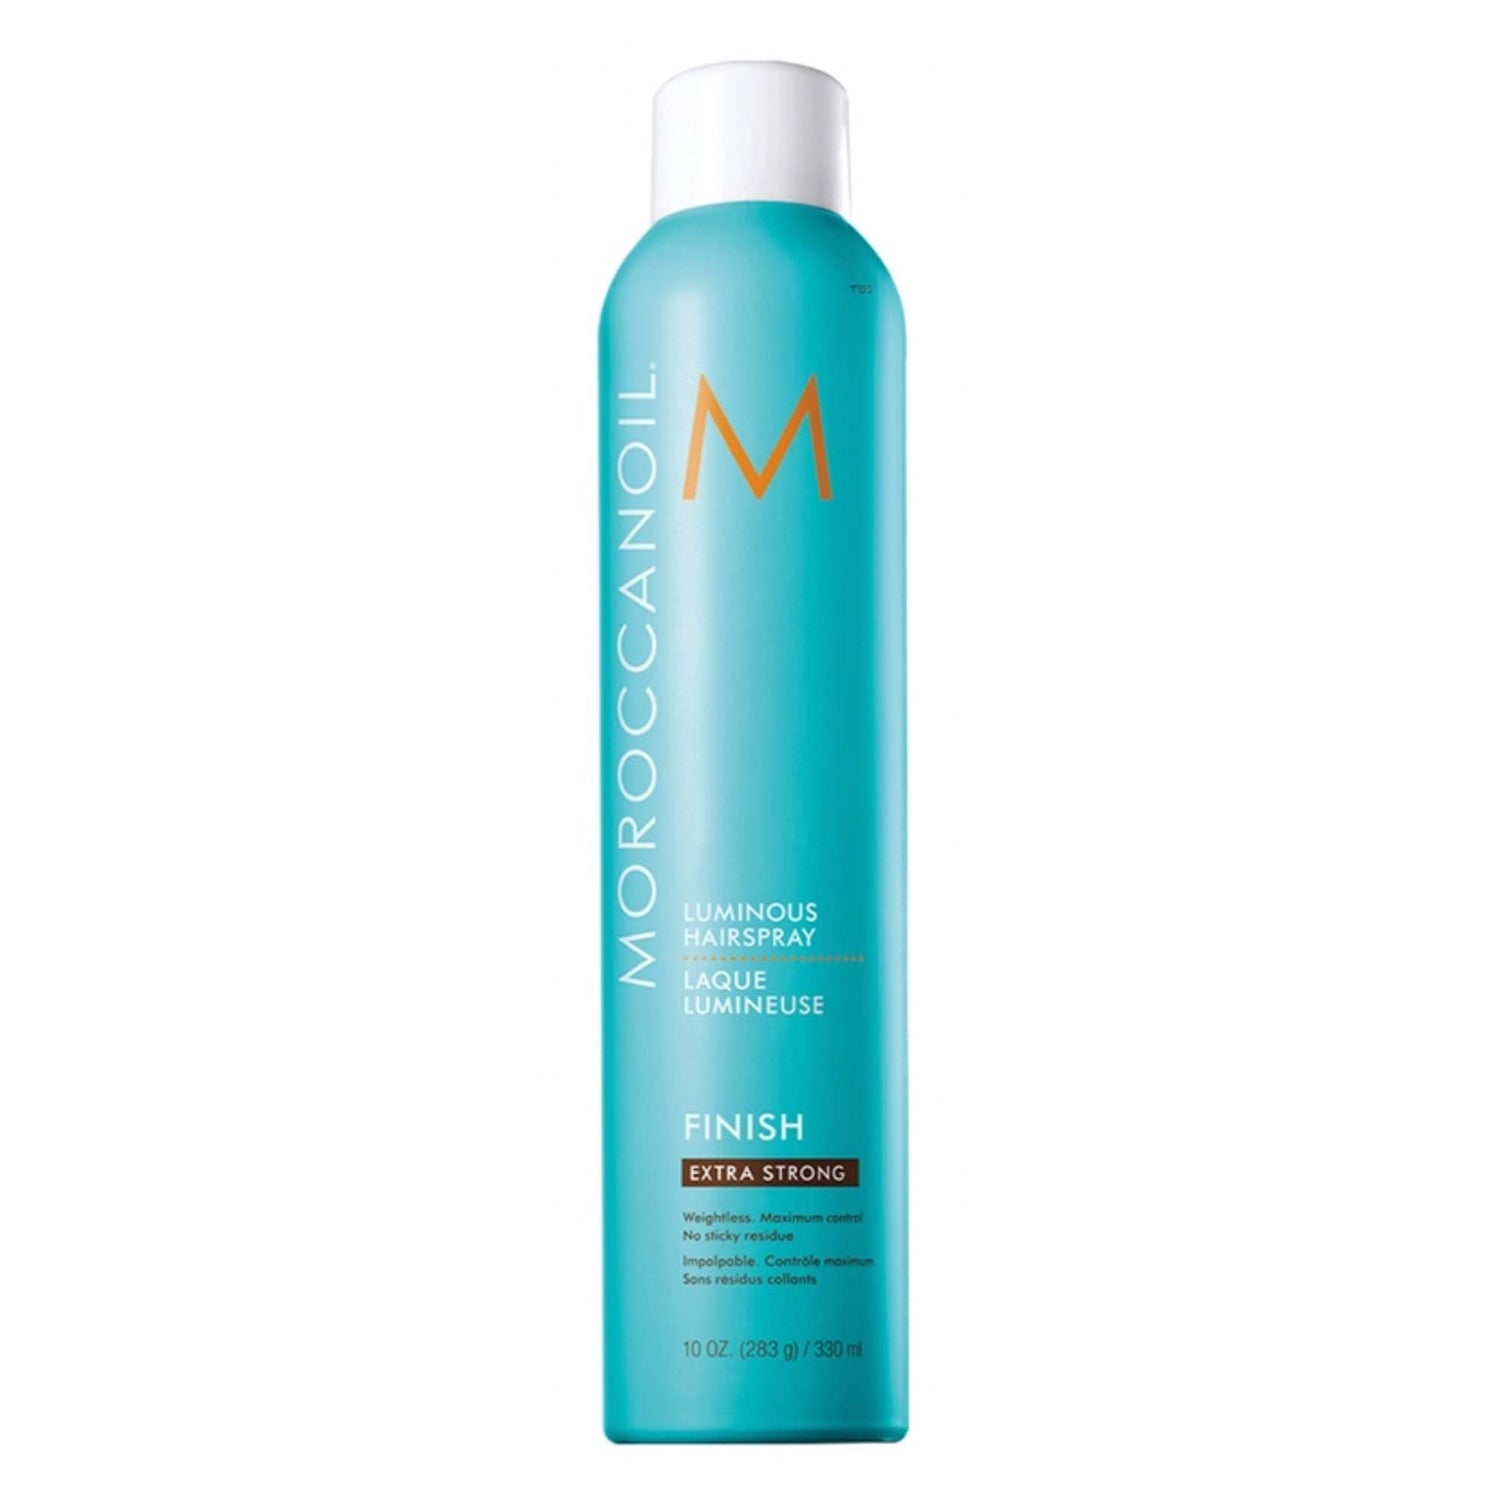 Morrocanoil Luminous Hairspray Finish Extra Strong 10oz